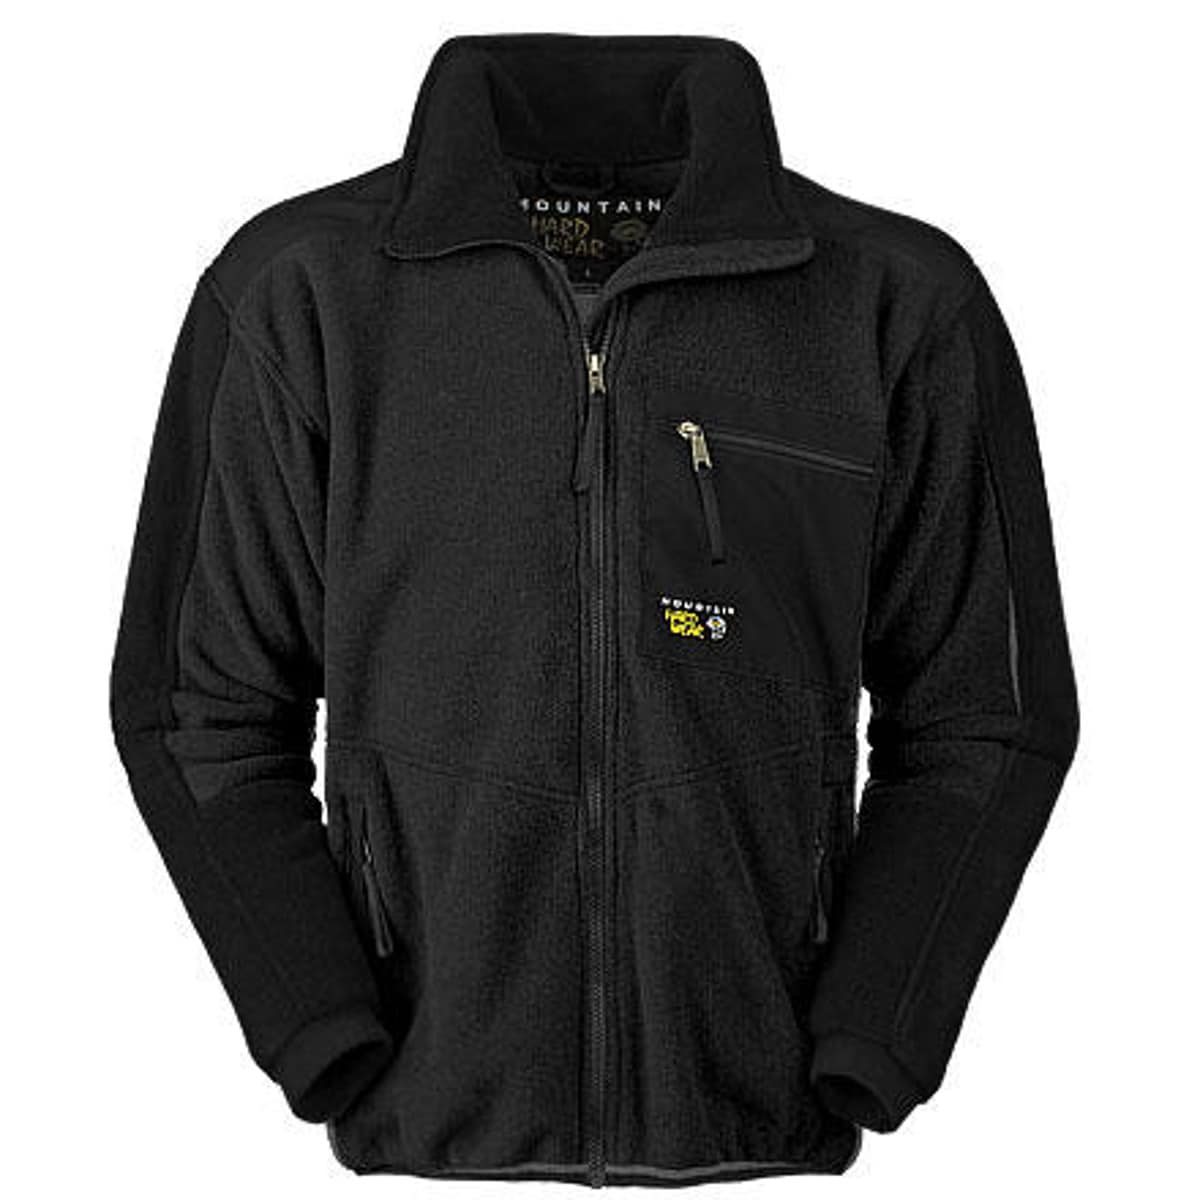 Mountain Hardwear Chill Factor Jacket - Men's - Clothing